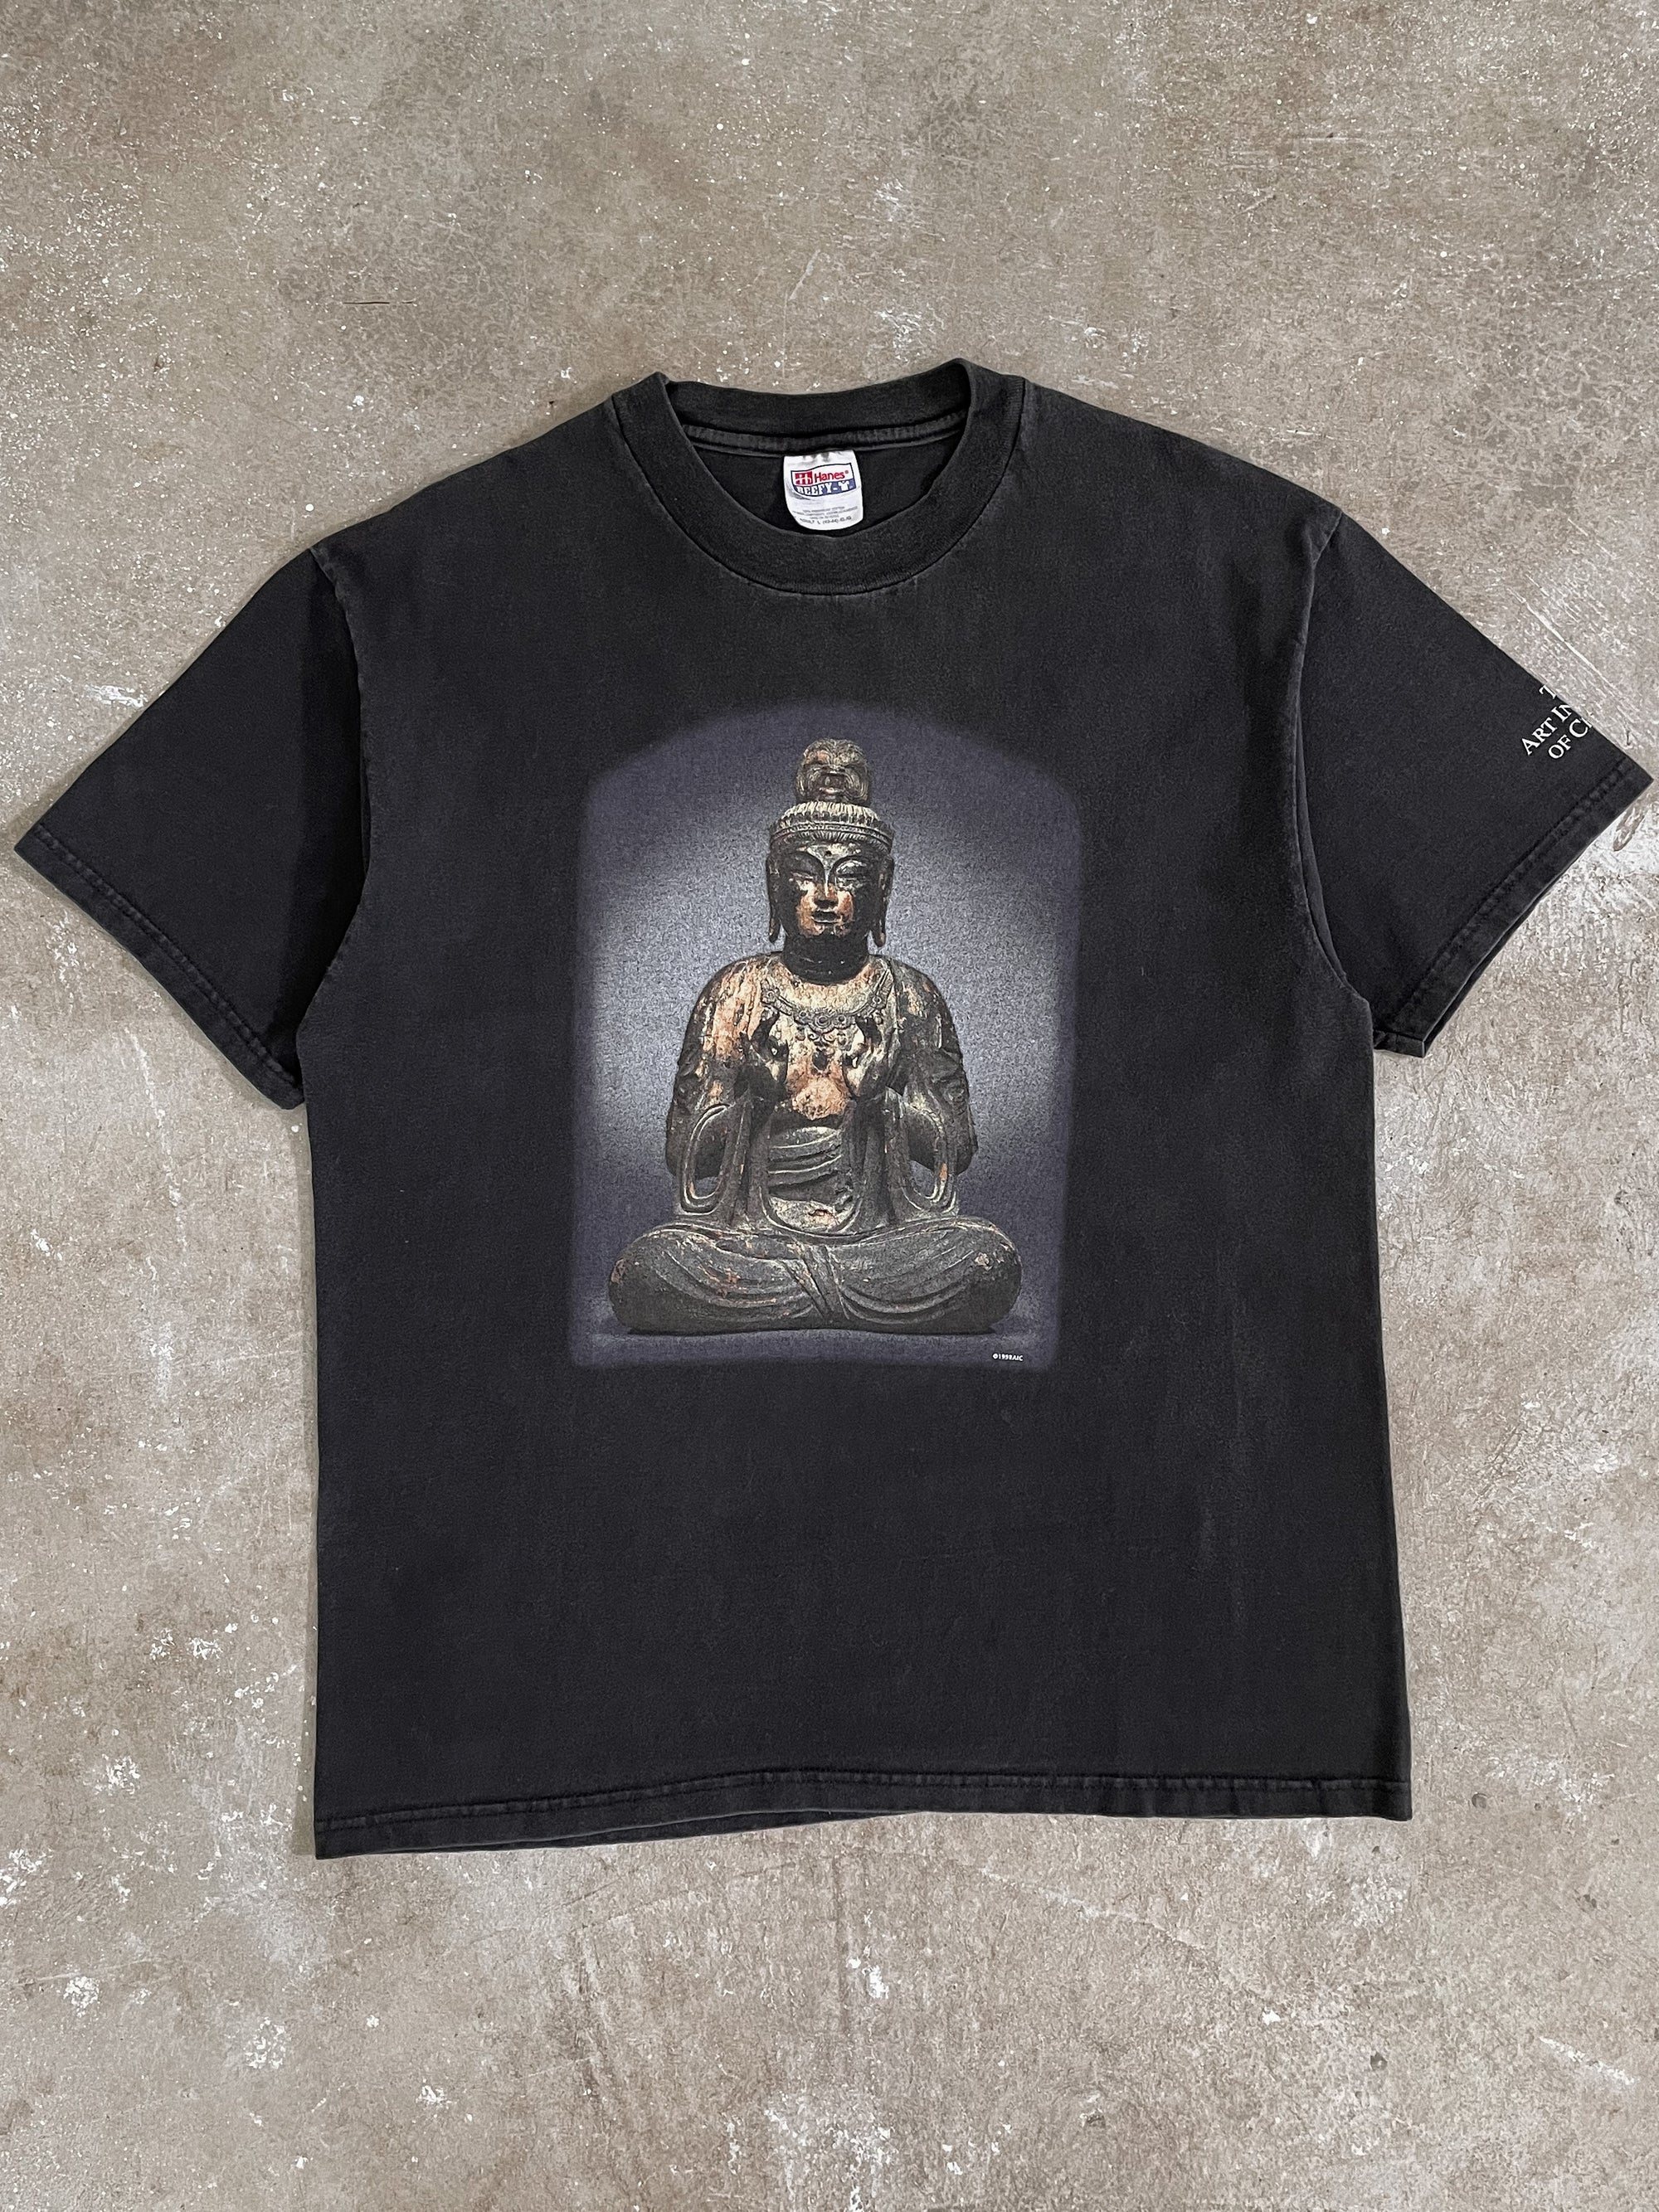 1990s “Art Institute of Chicago Buddha” Tee (L)